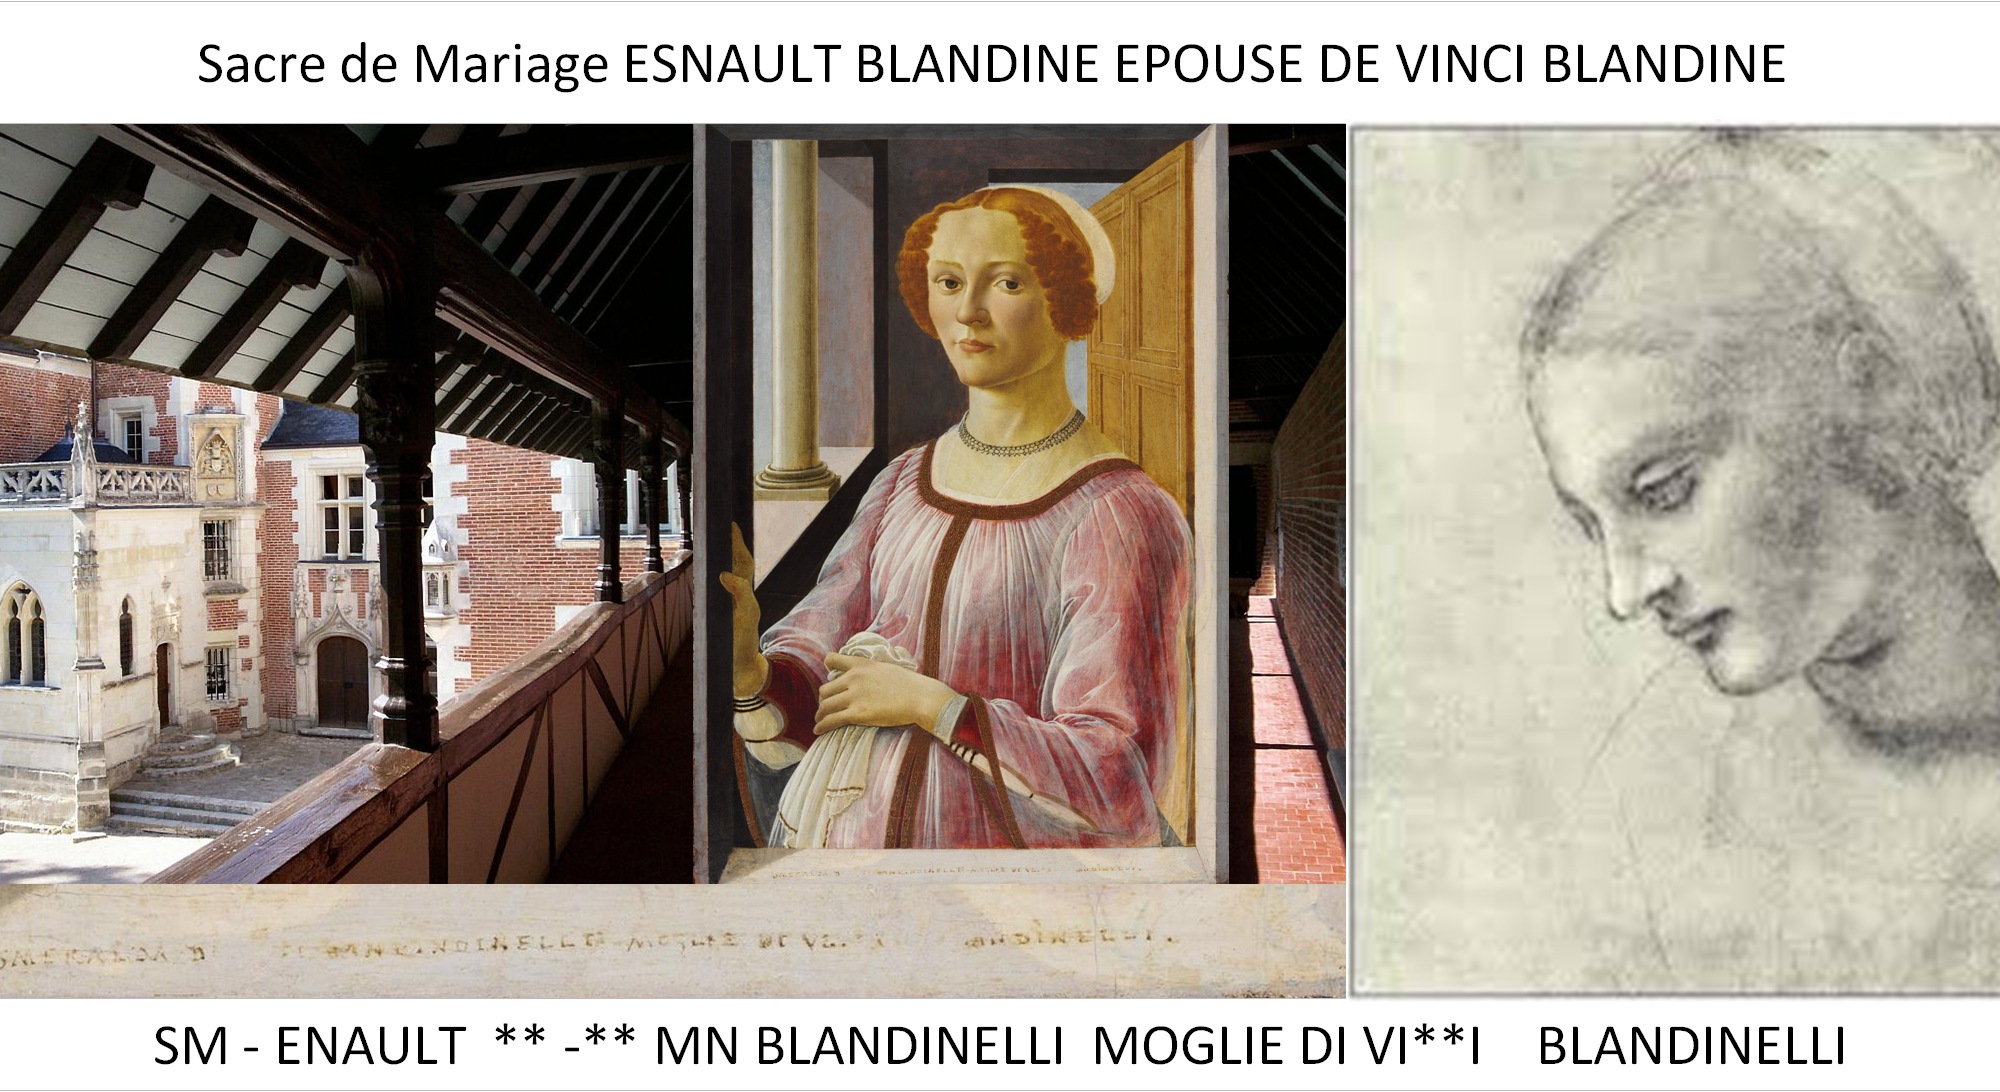 ESNAULT BLANDINE Epouse DE VINCI BLANDINE